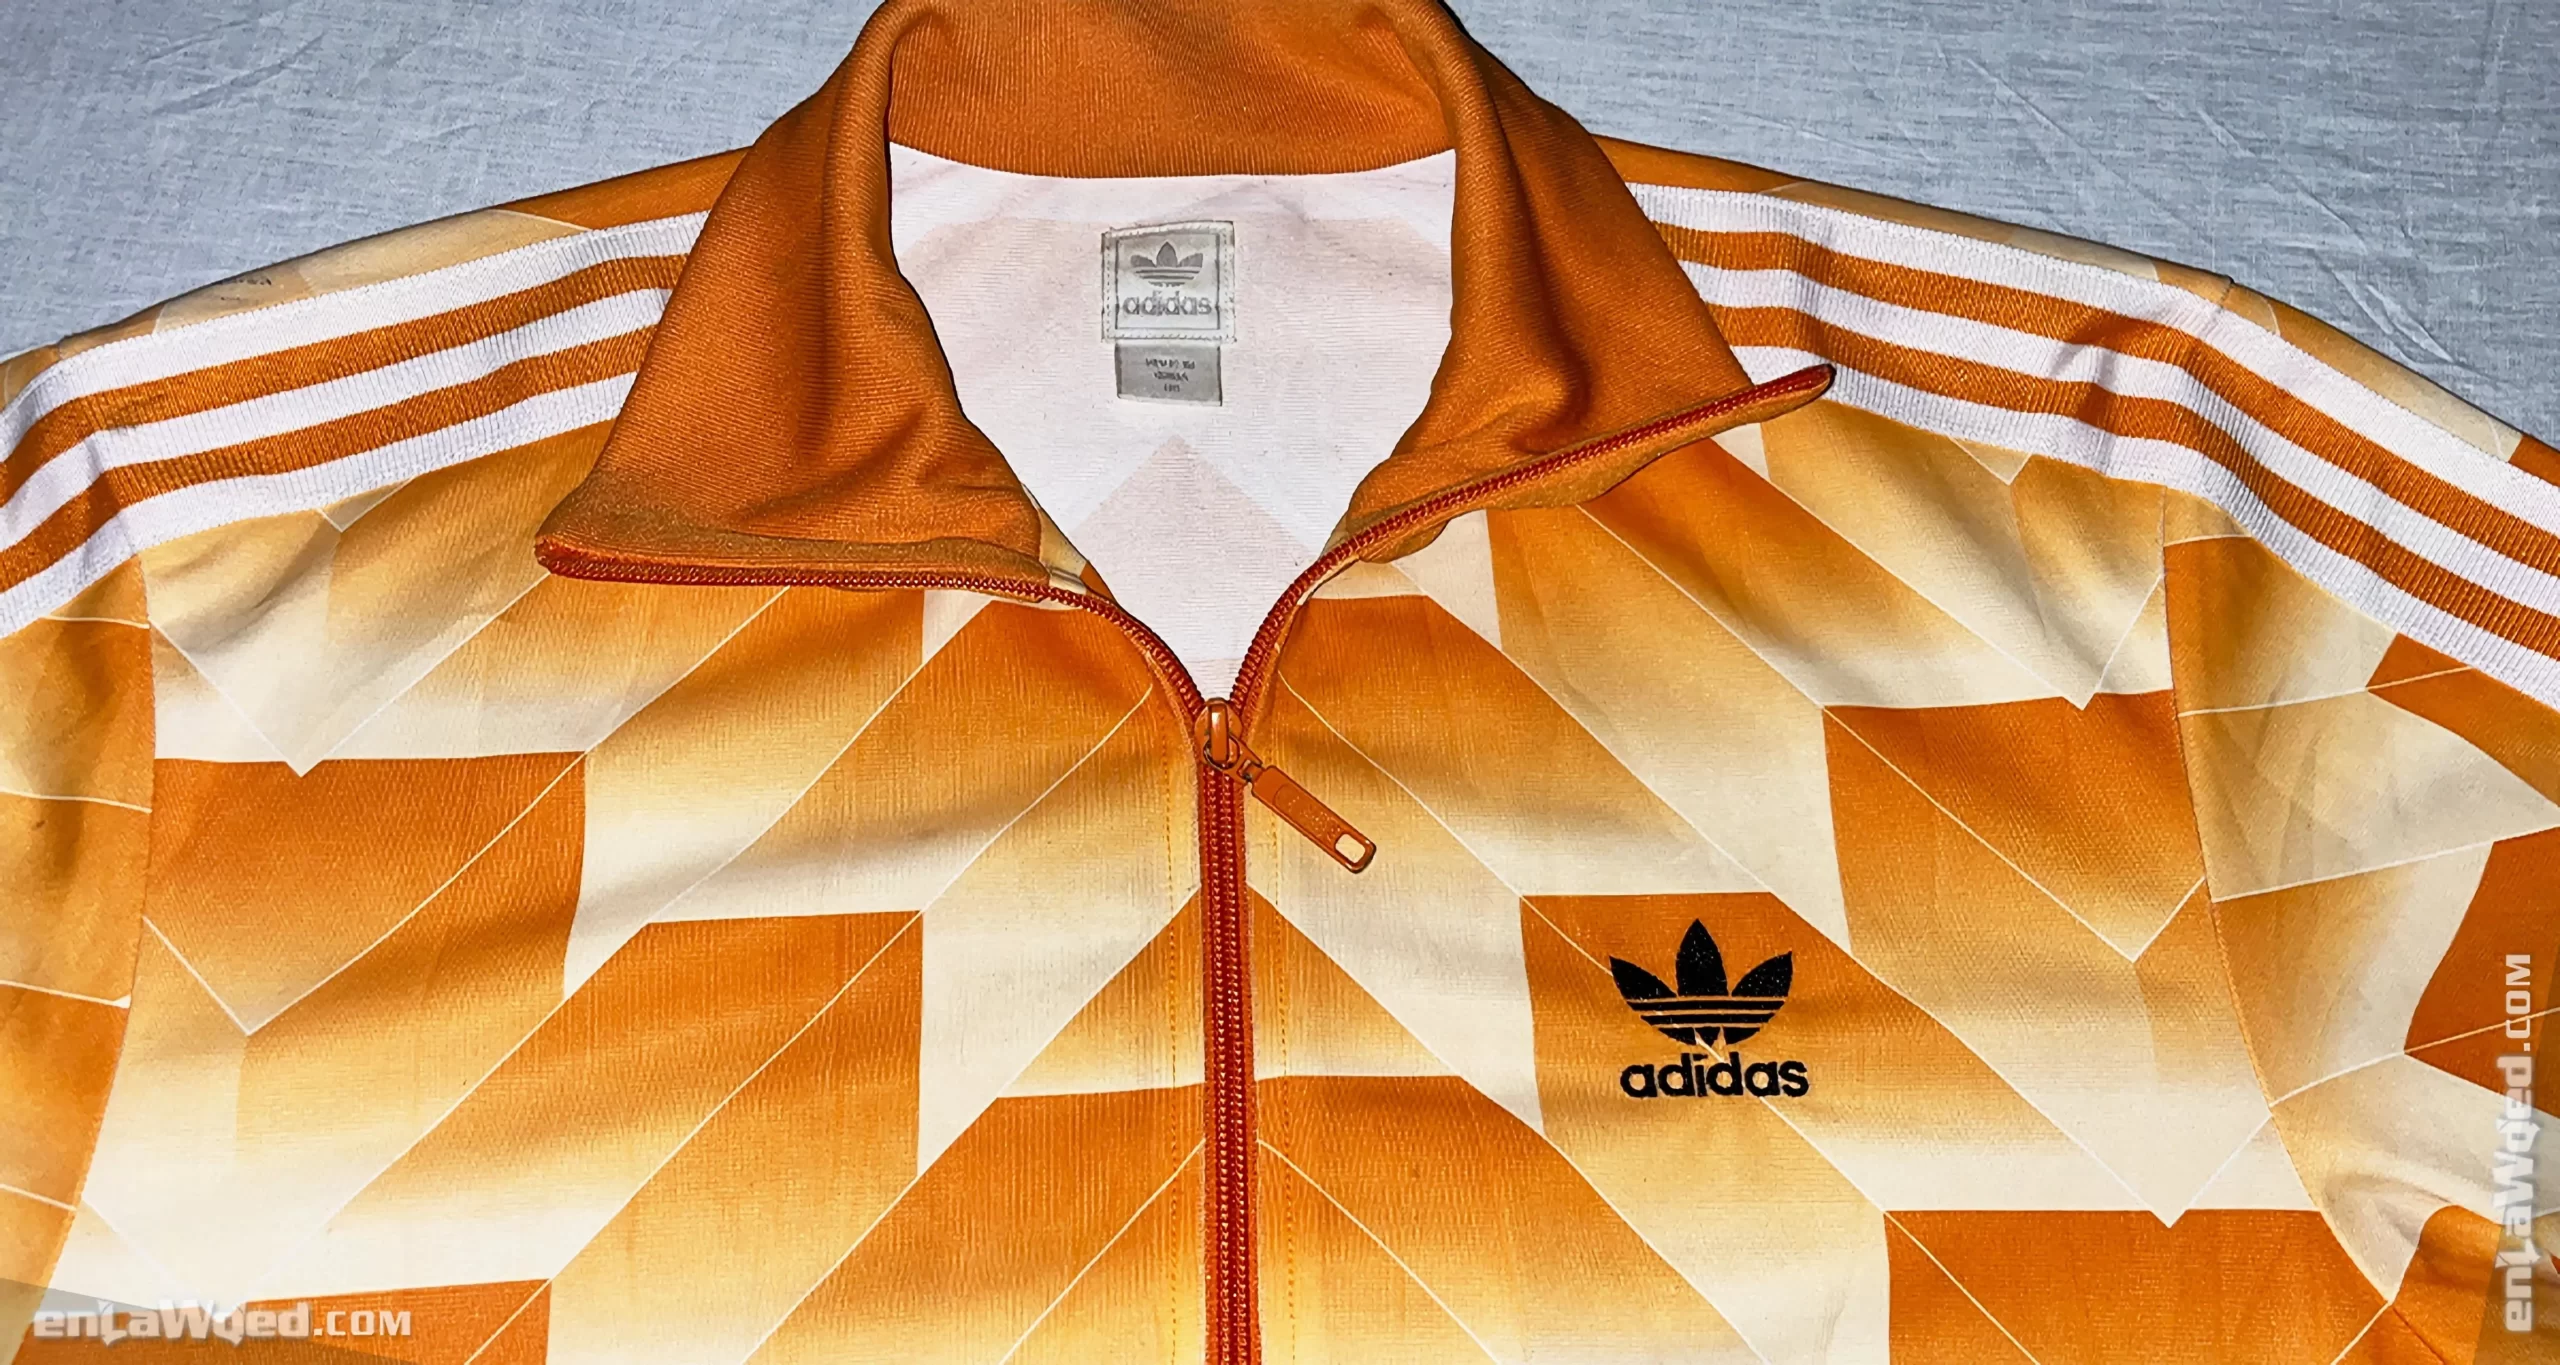 Men’s 2006 Adidas Netherlands Euro 1988 Ipswich Template TT: Spotlight (EnLawded.com file #lp1ldgg5126407q4can5dcpfl)